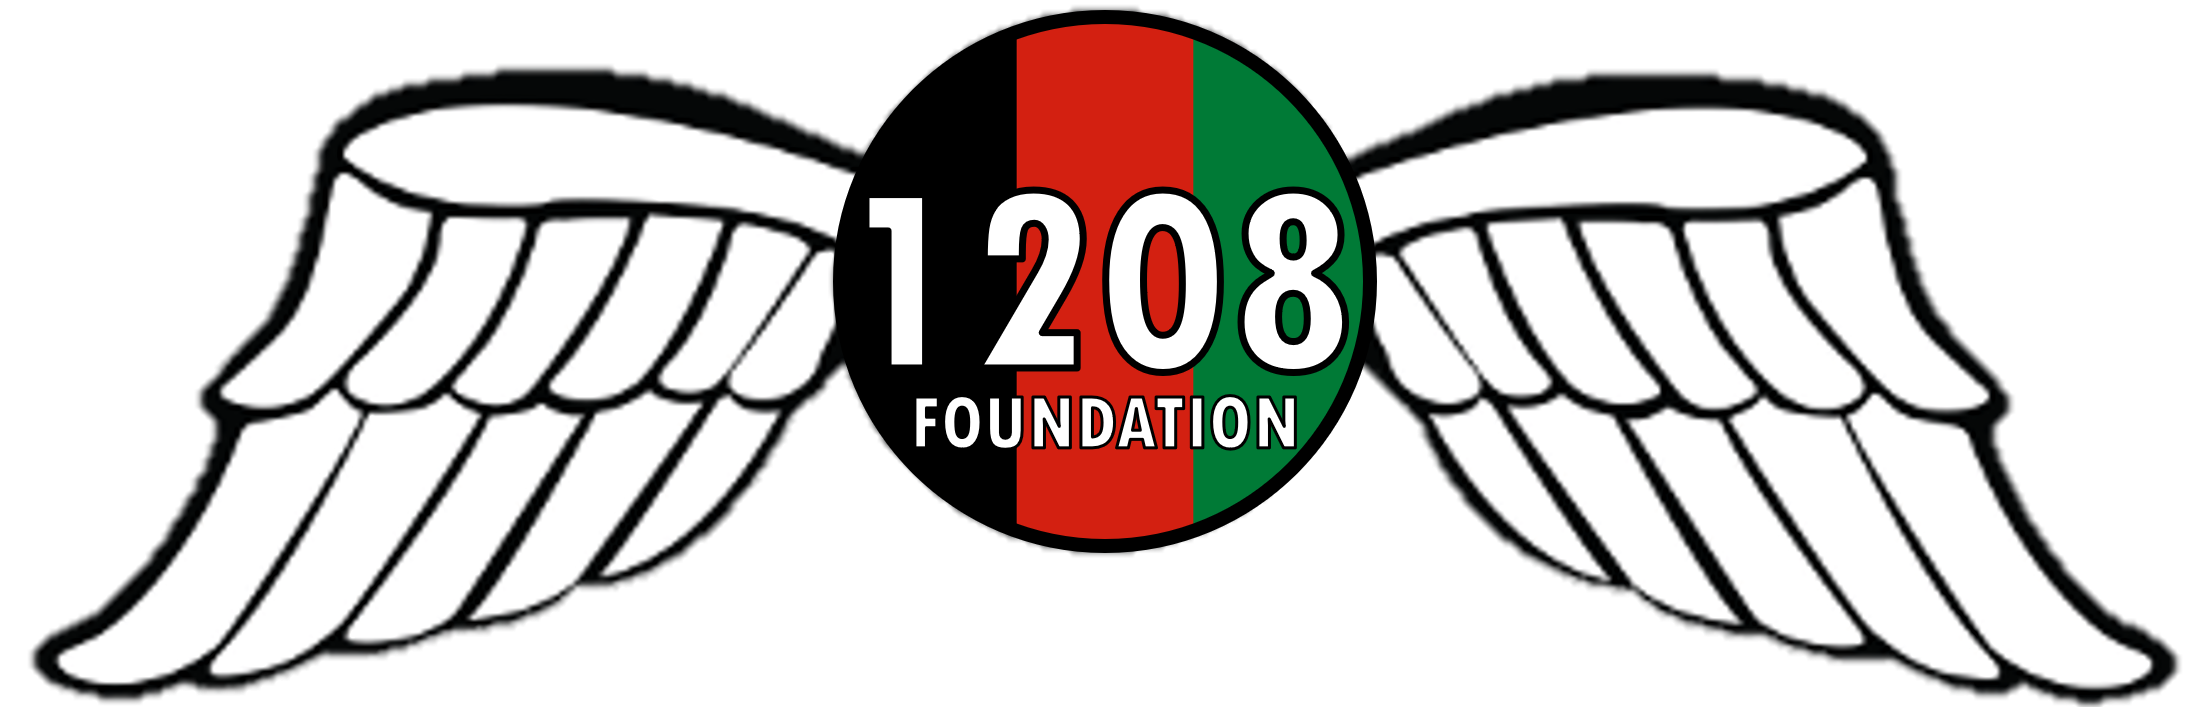 1208 Foundation logo